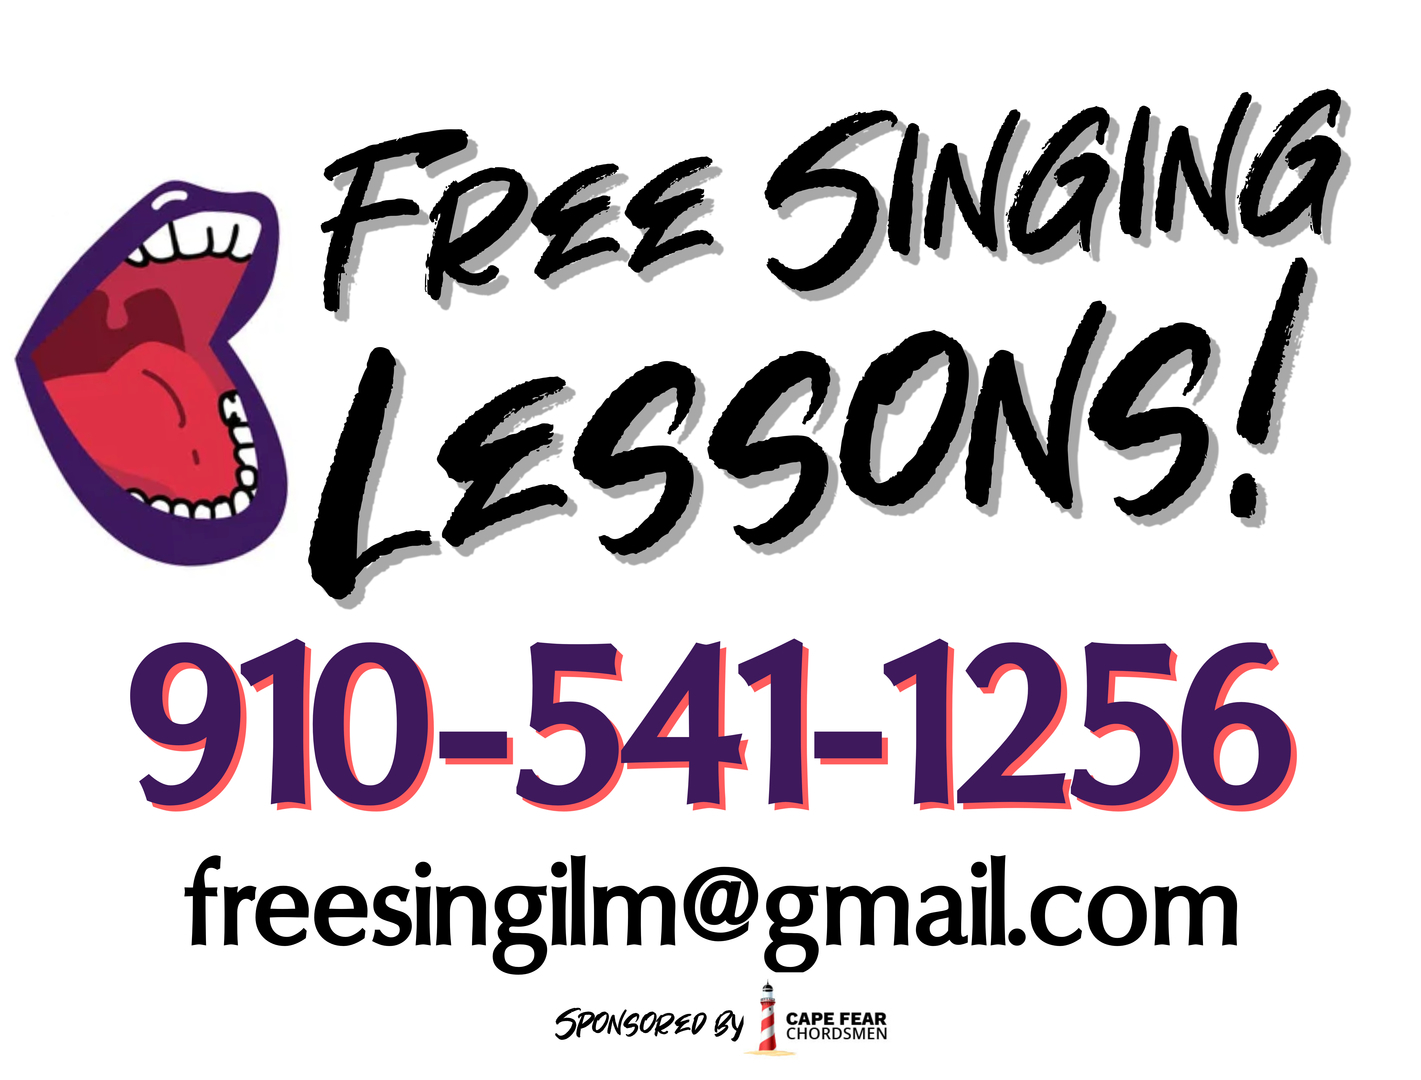 Free Singing Lessons, Wilmington, North Carolina, United States